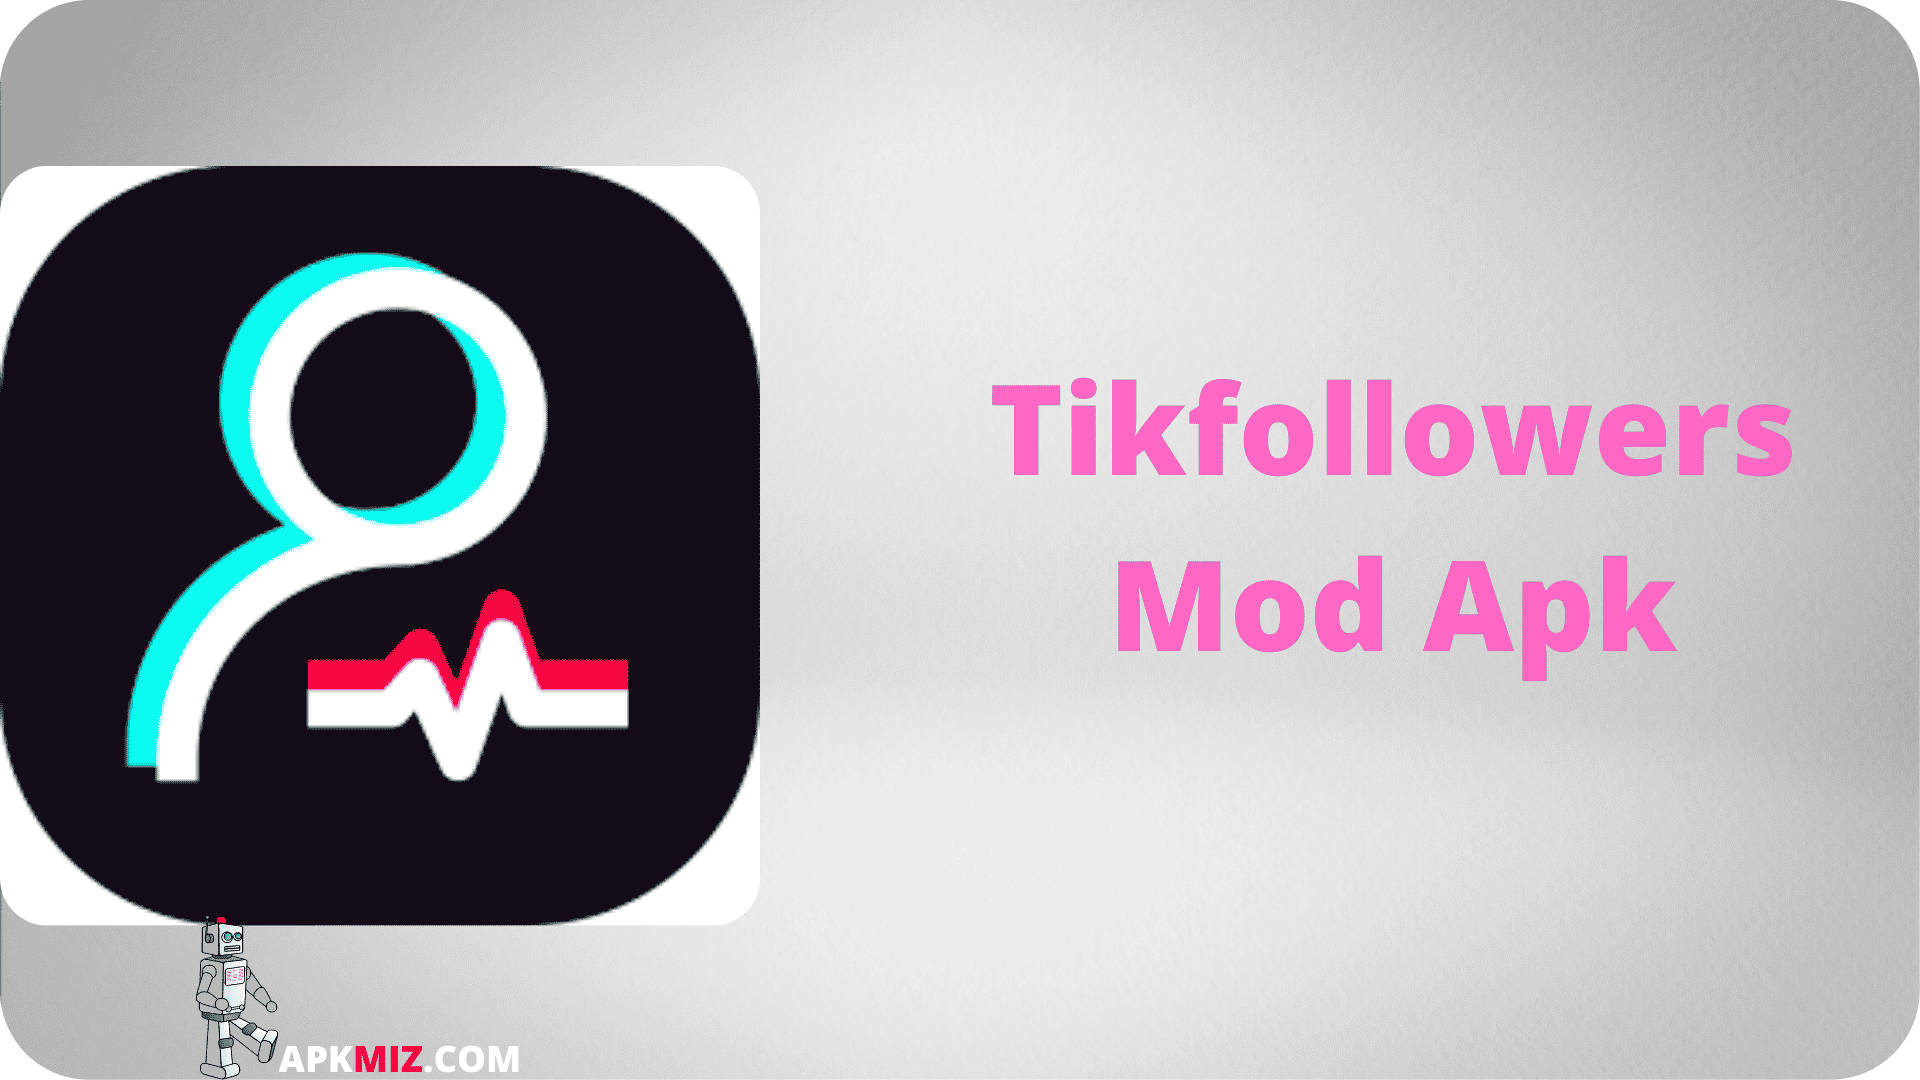 Tikfollowers Mod Apk